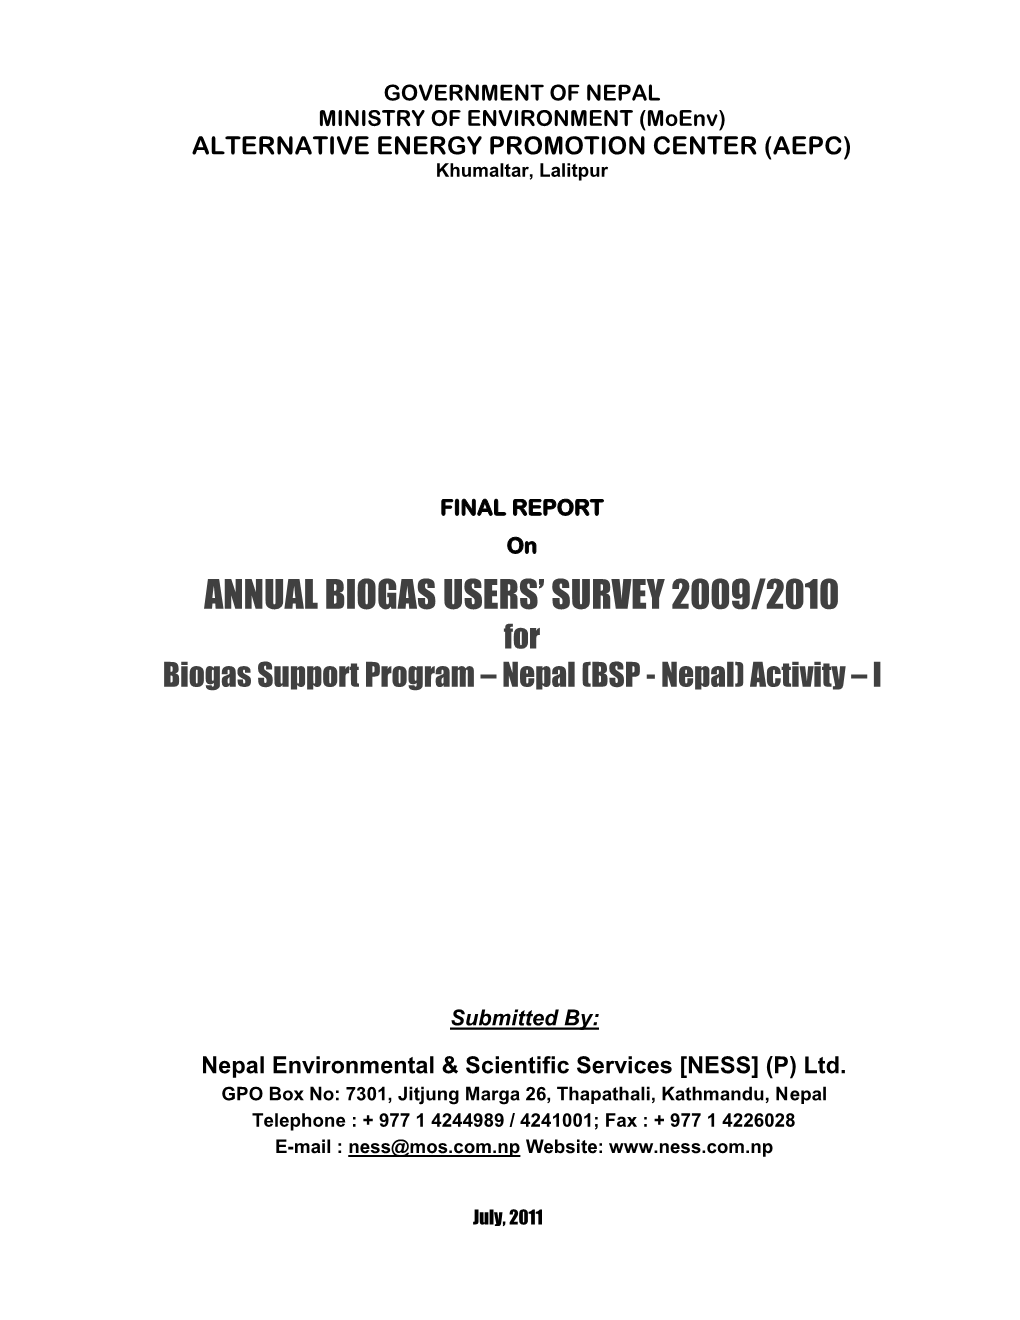 Biogas User Survey, Nepal 2009-2010